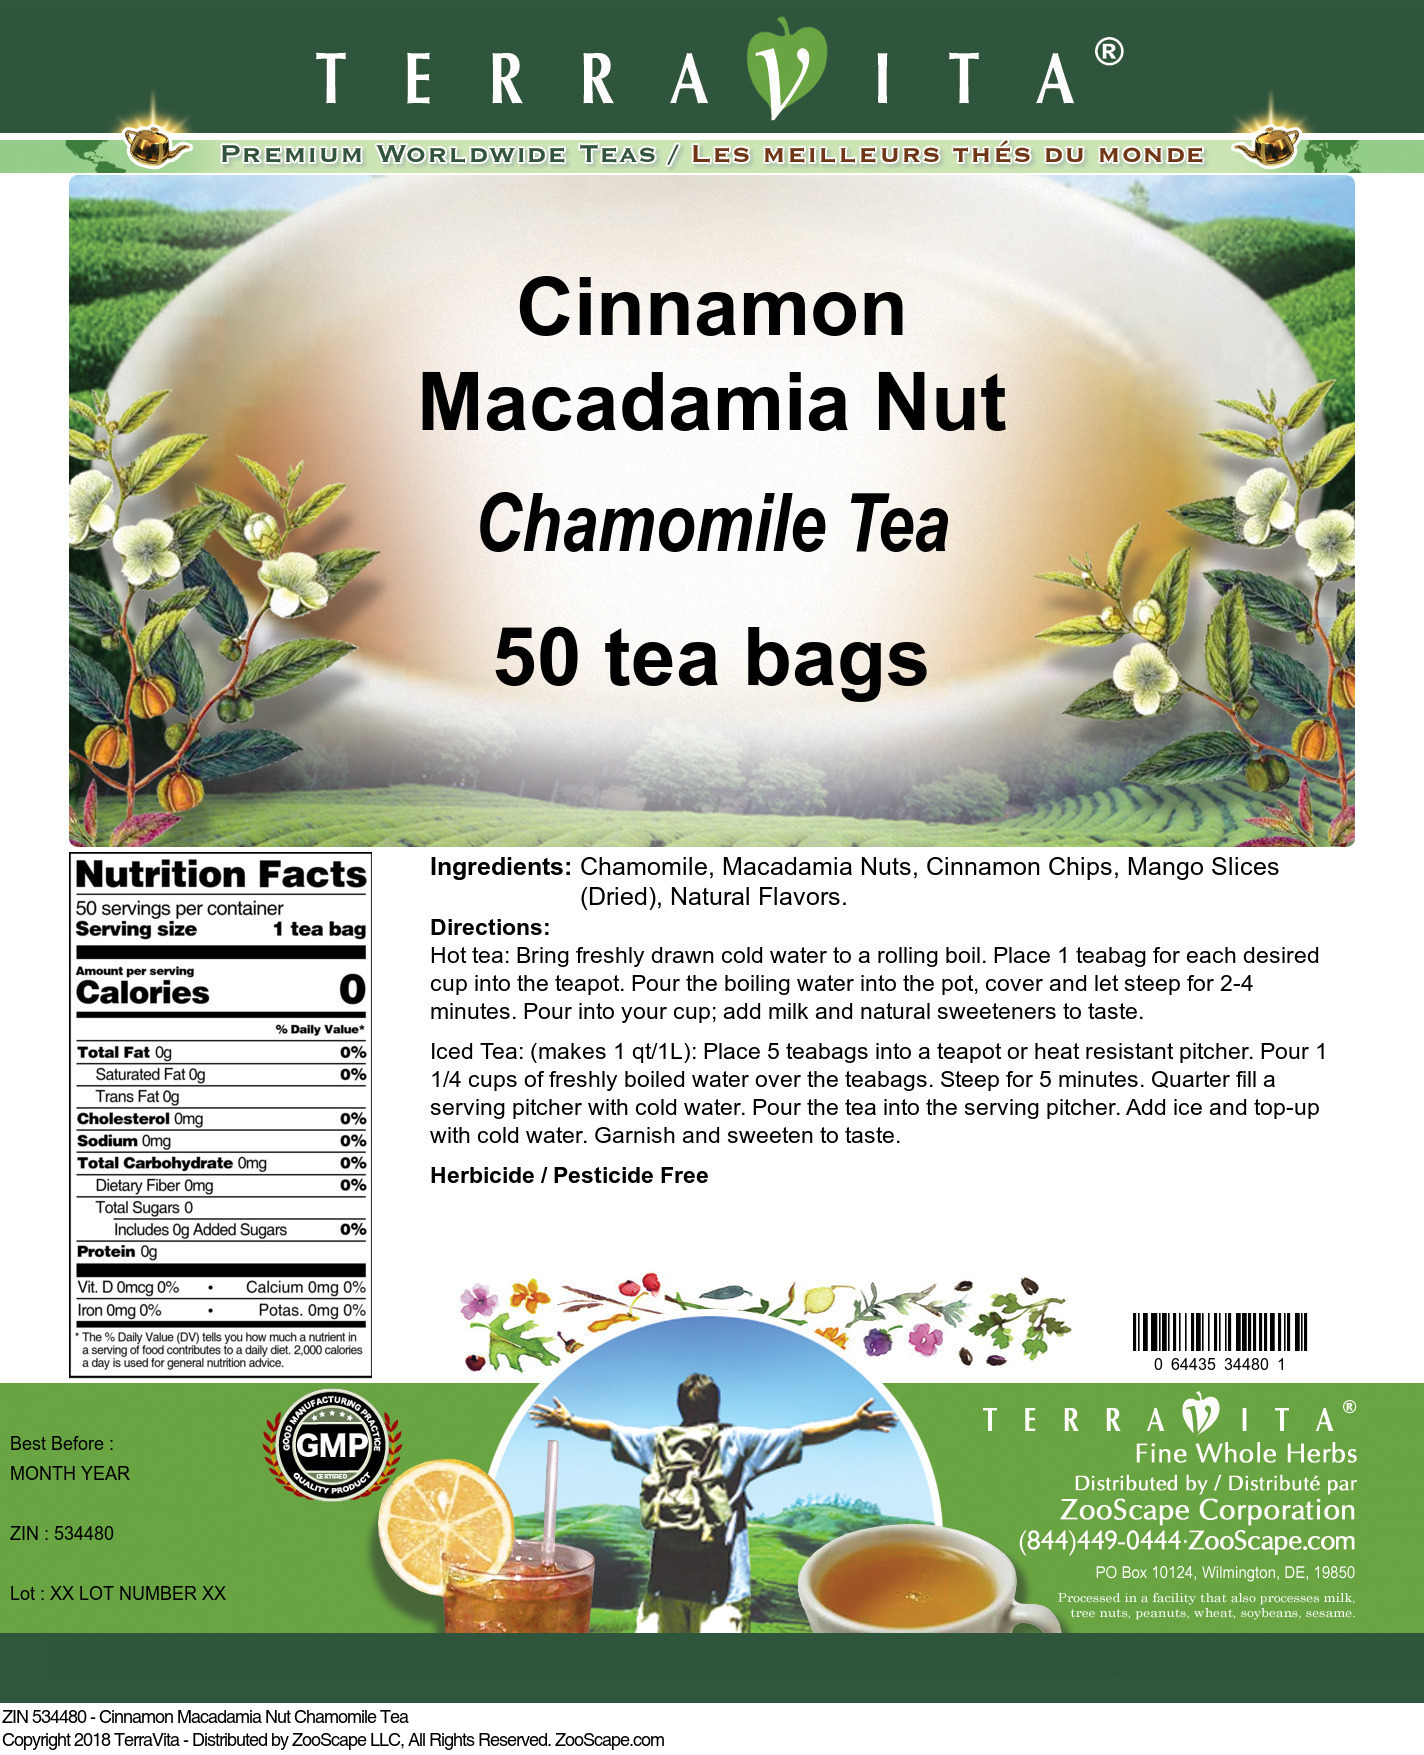 Cinnamon Macadamia Nut Chamomile Tea - Label